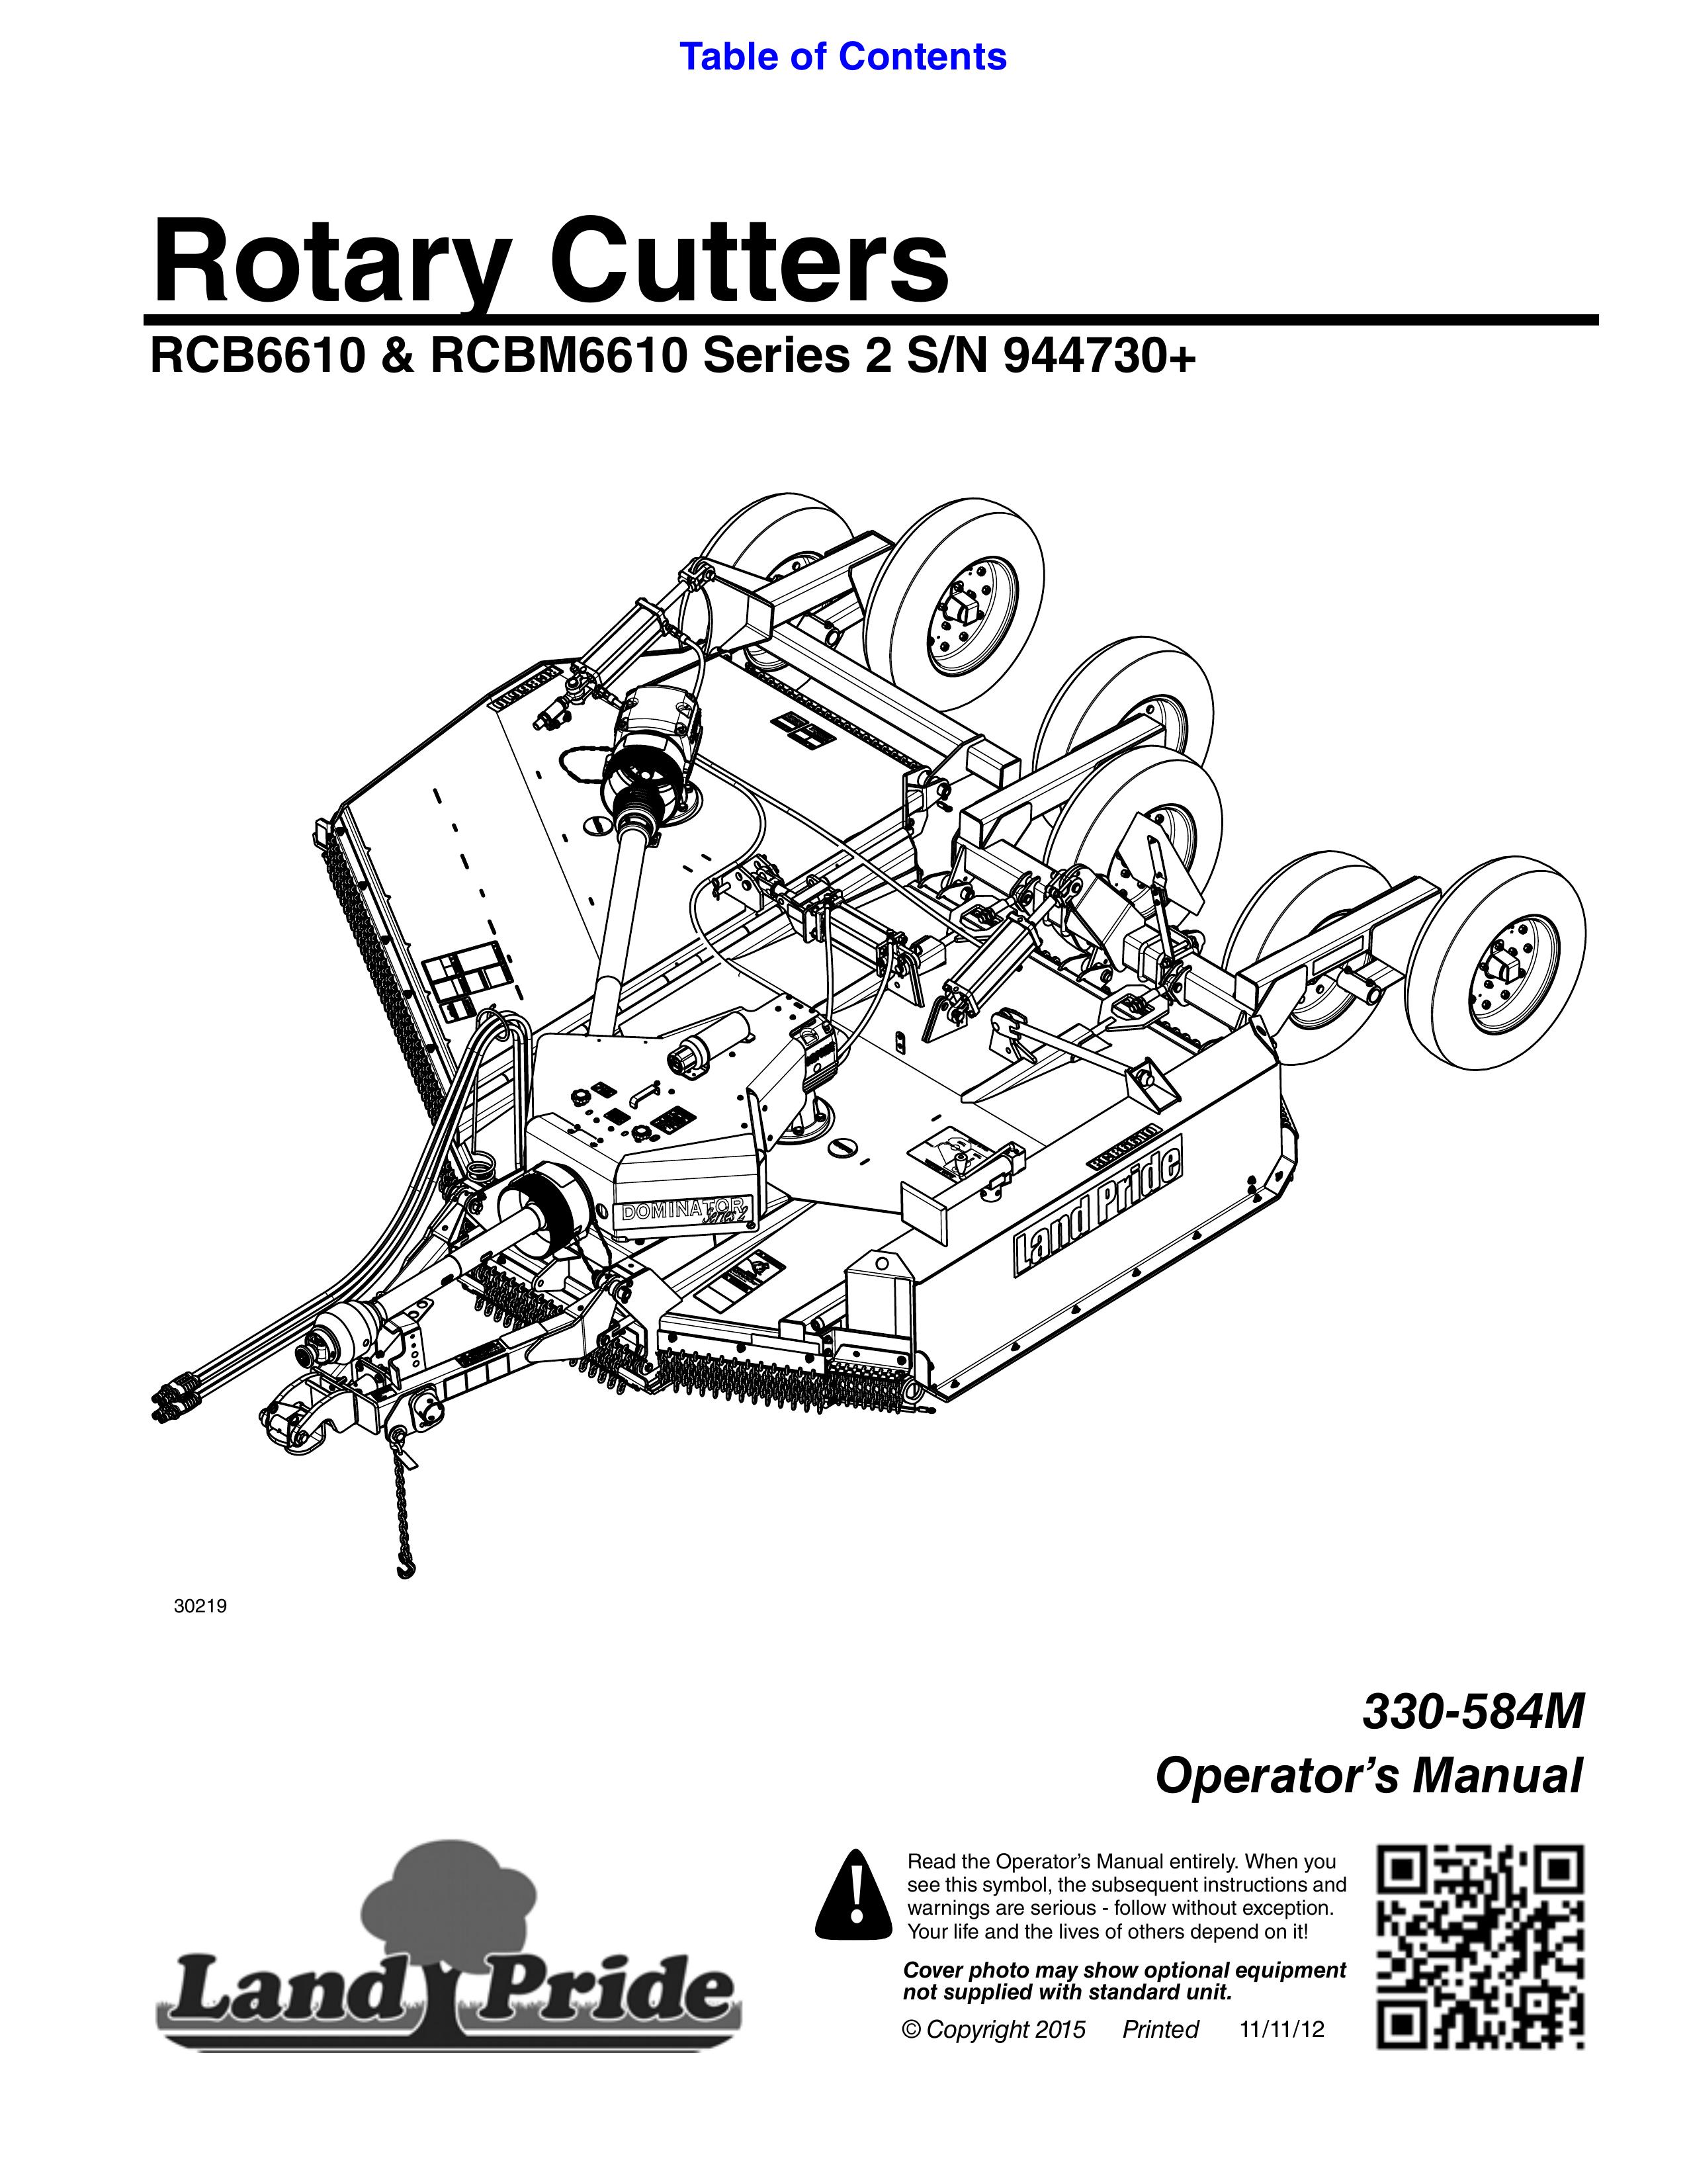 Land Pride RCBM6610 Brush Cutter User Manual